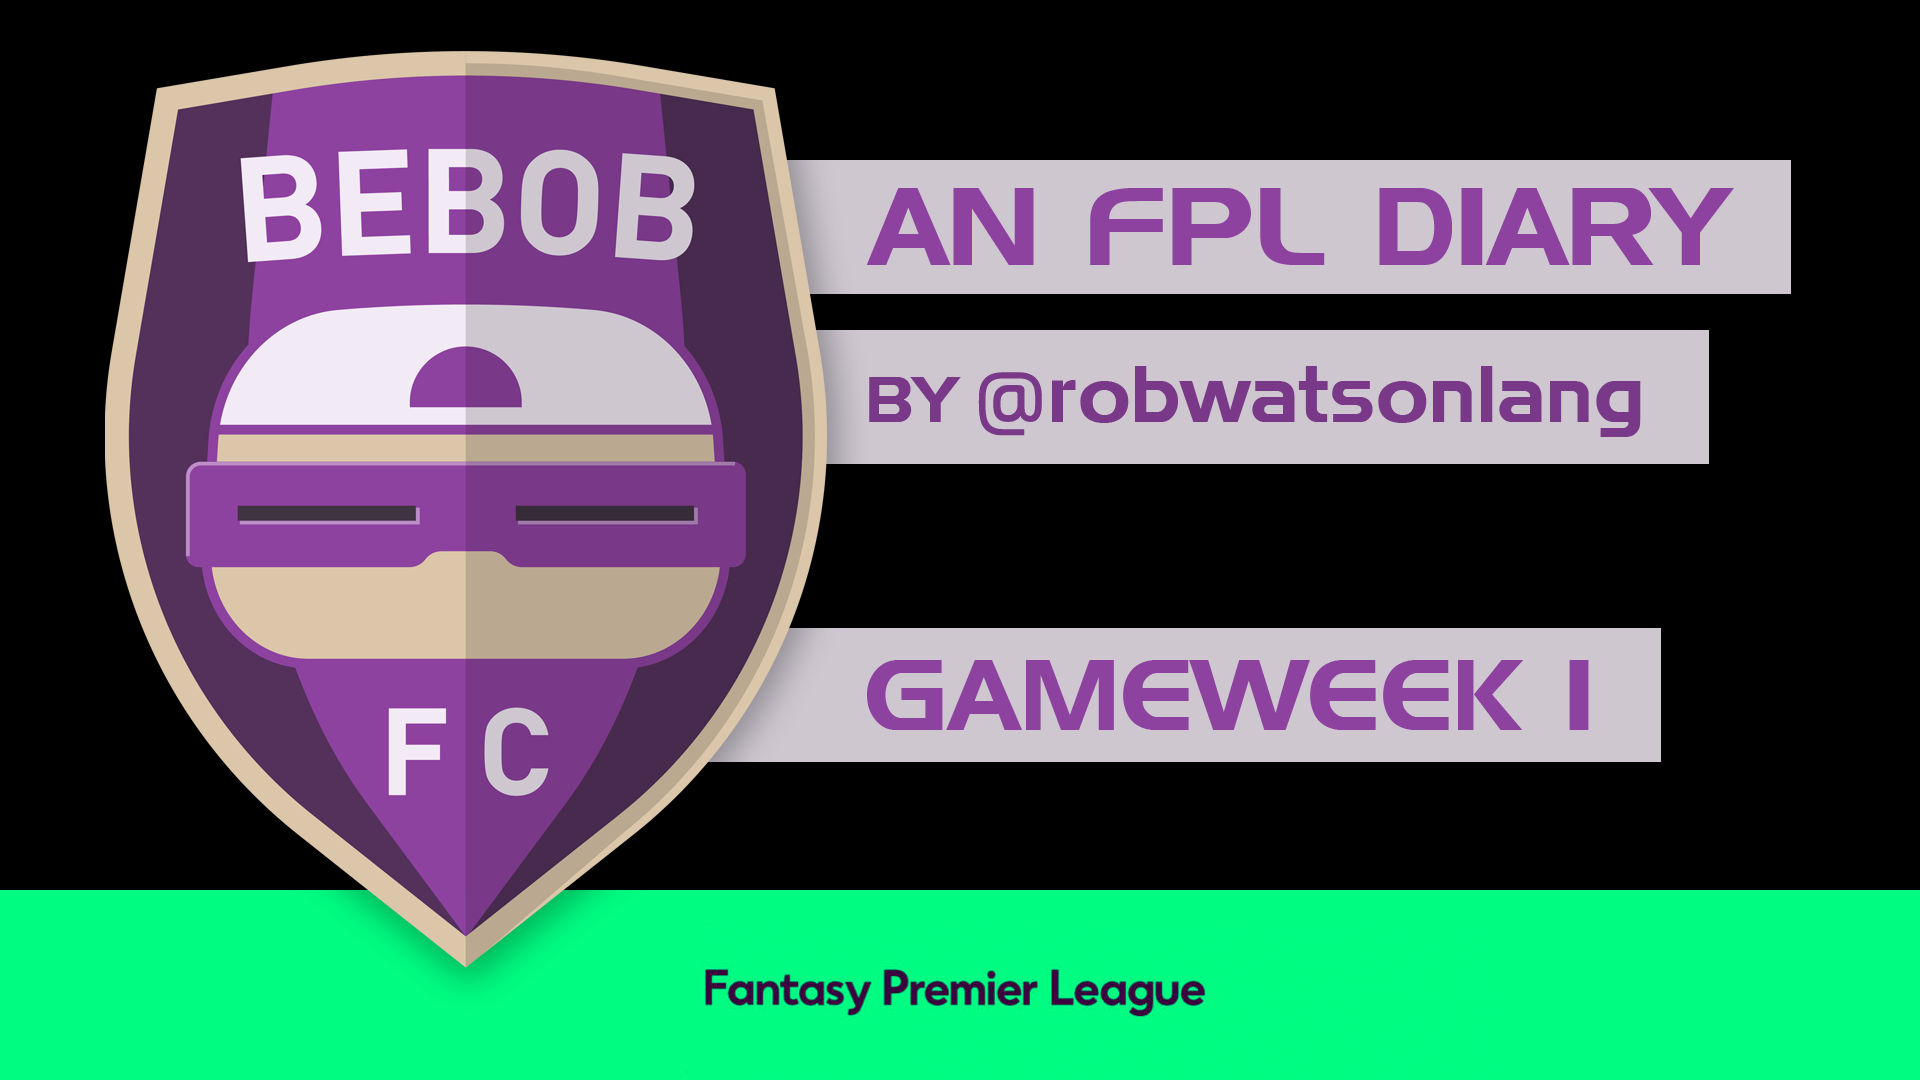 BEBOB FC – An FPL Diary by Rob Watson-Lang – GAMEWEEK 1